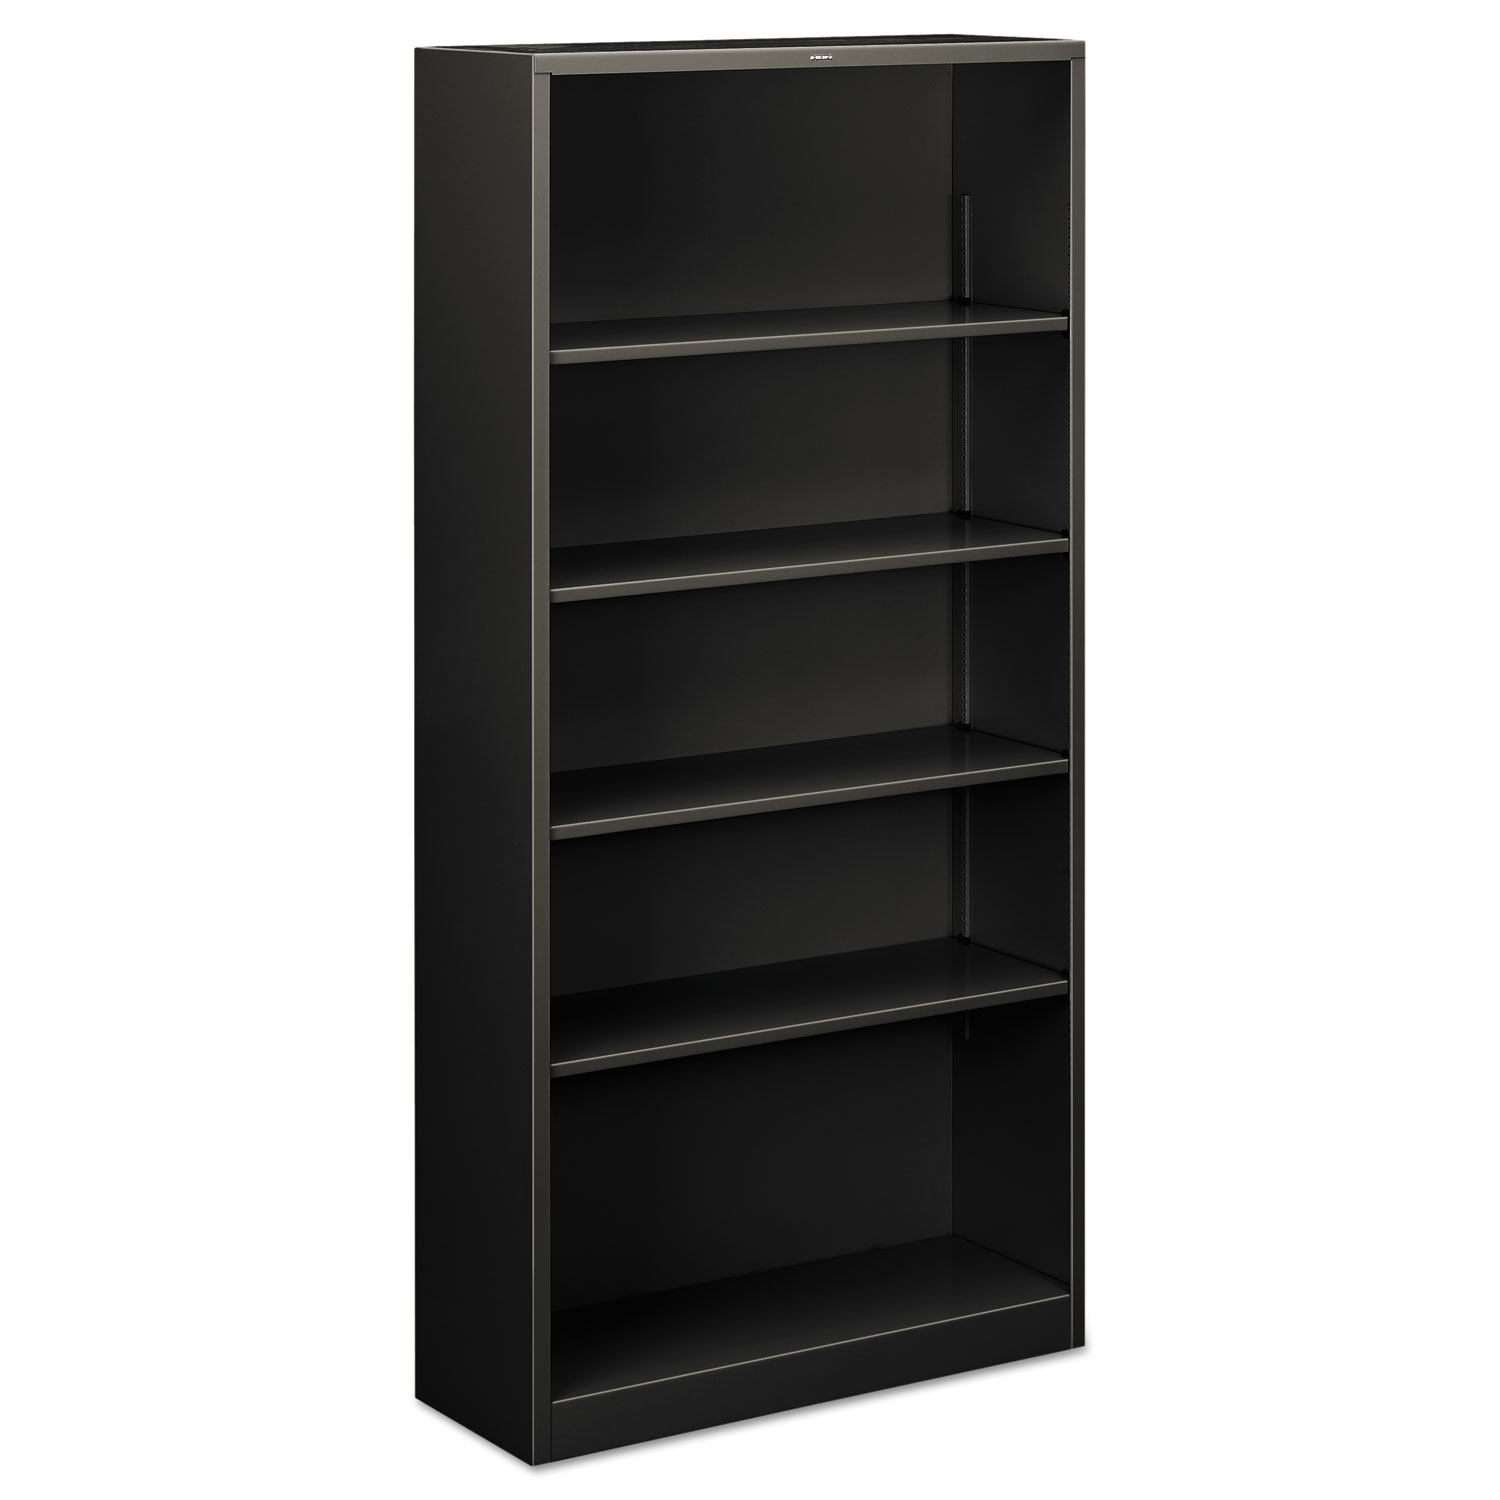  HON HS72ABC.S Metal Bookcase, Five-Shelf, 34-1/2w x 12-5/8d x 71h, Charcoal (HONS72ABCS) 